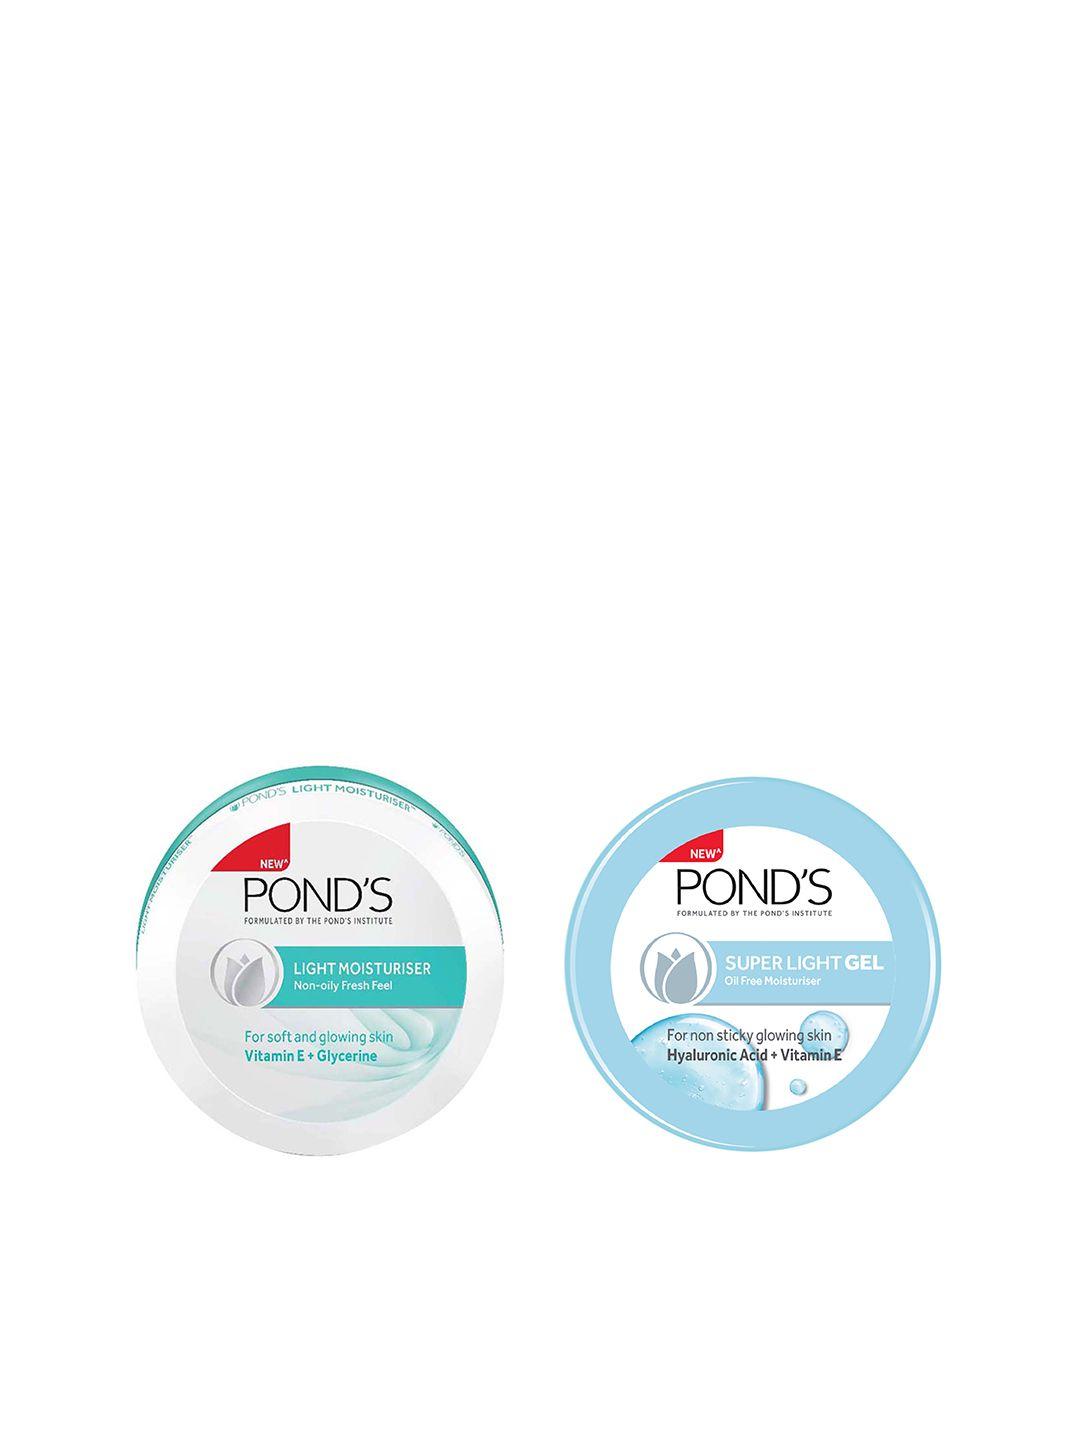 ponds-set-of-non-oily-light-&-super-light-gel-oil-free-moisturisers